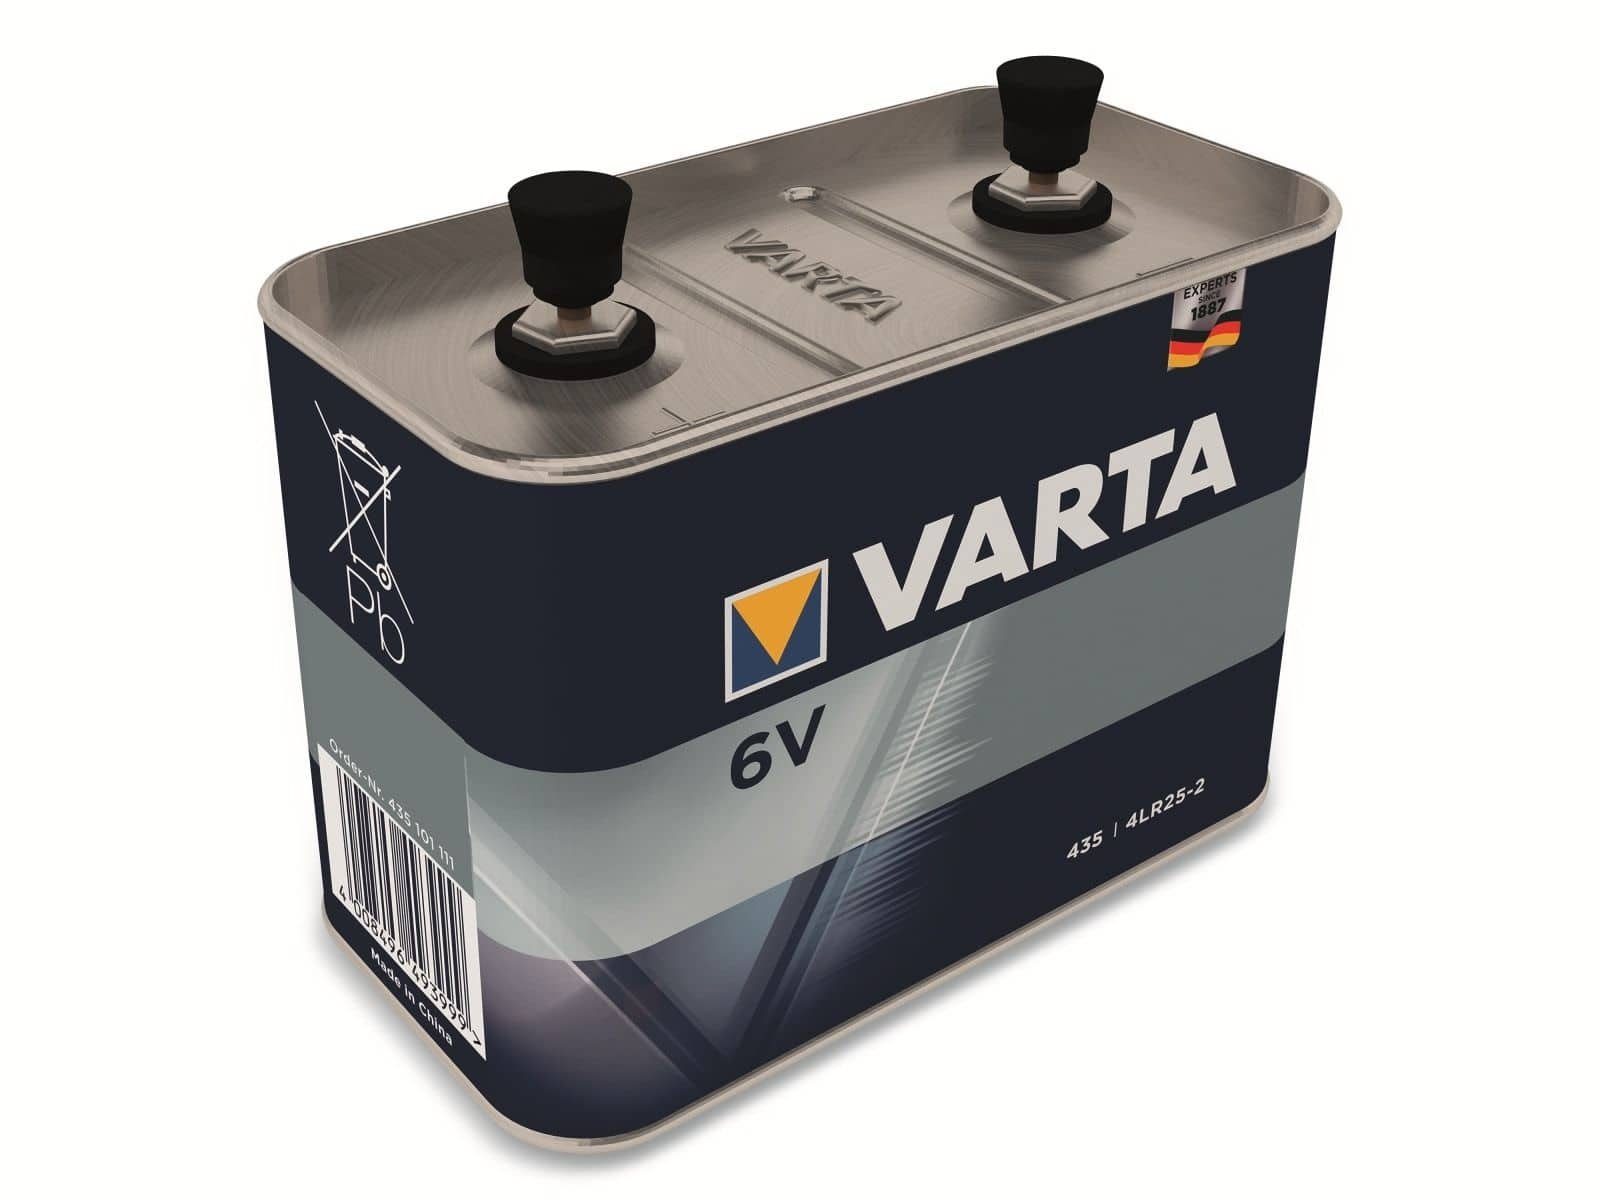 VARTA VARTA Batterie Alkaline, 435, 6V, 35.000mAh Batterie